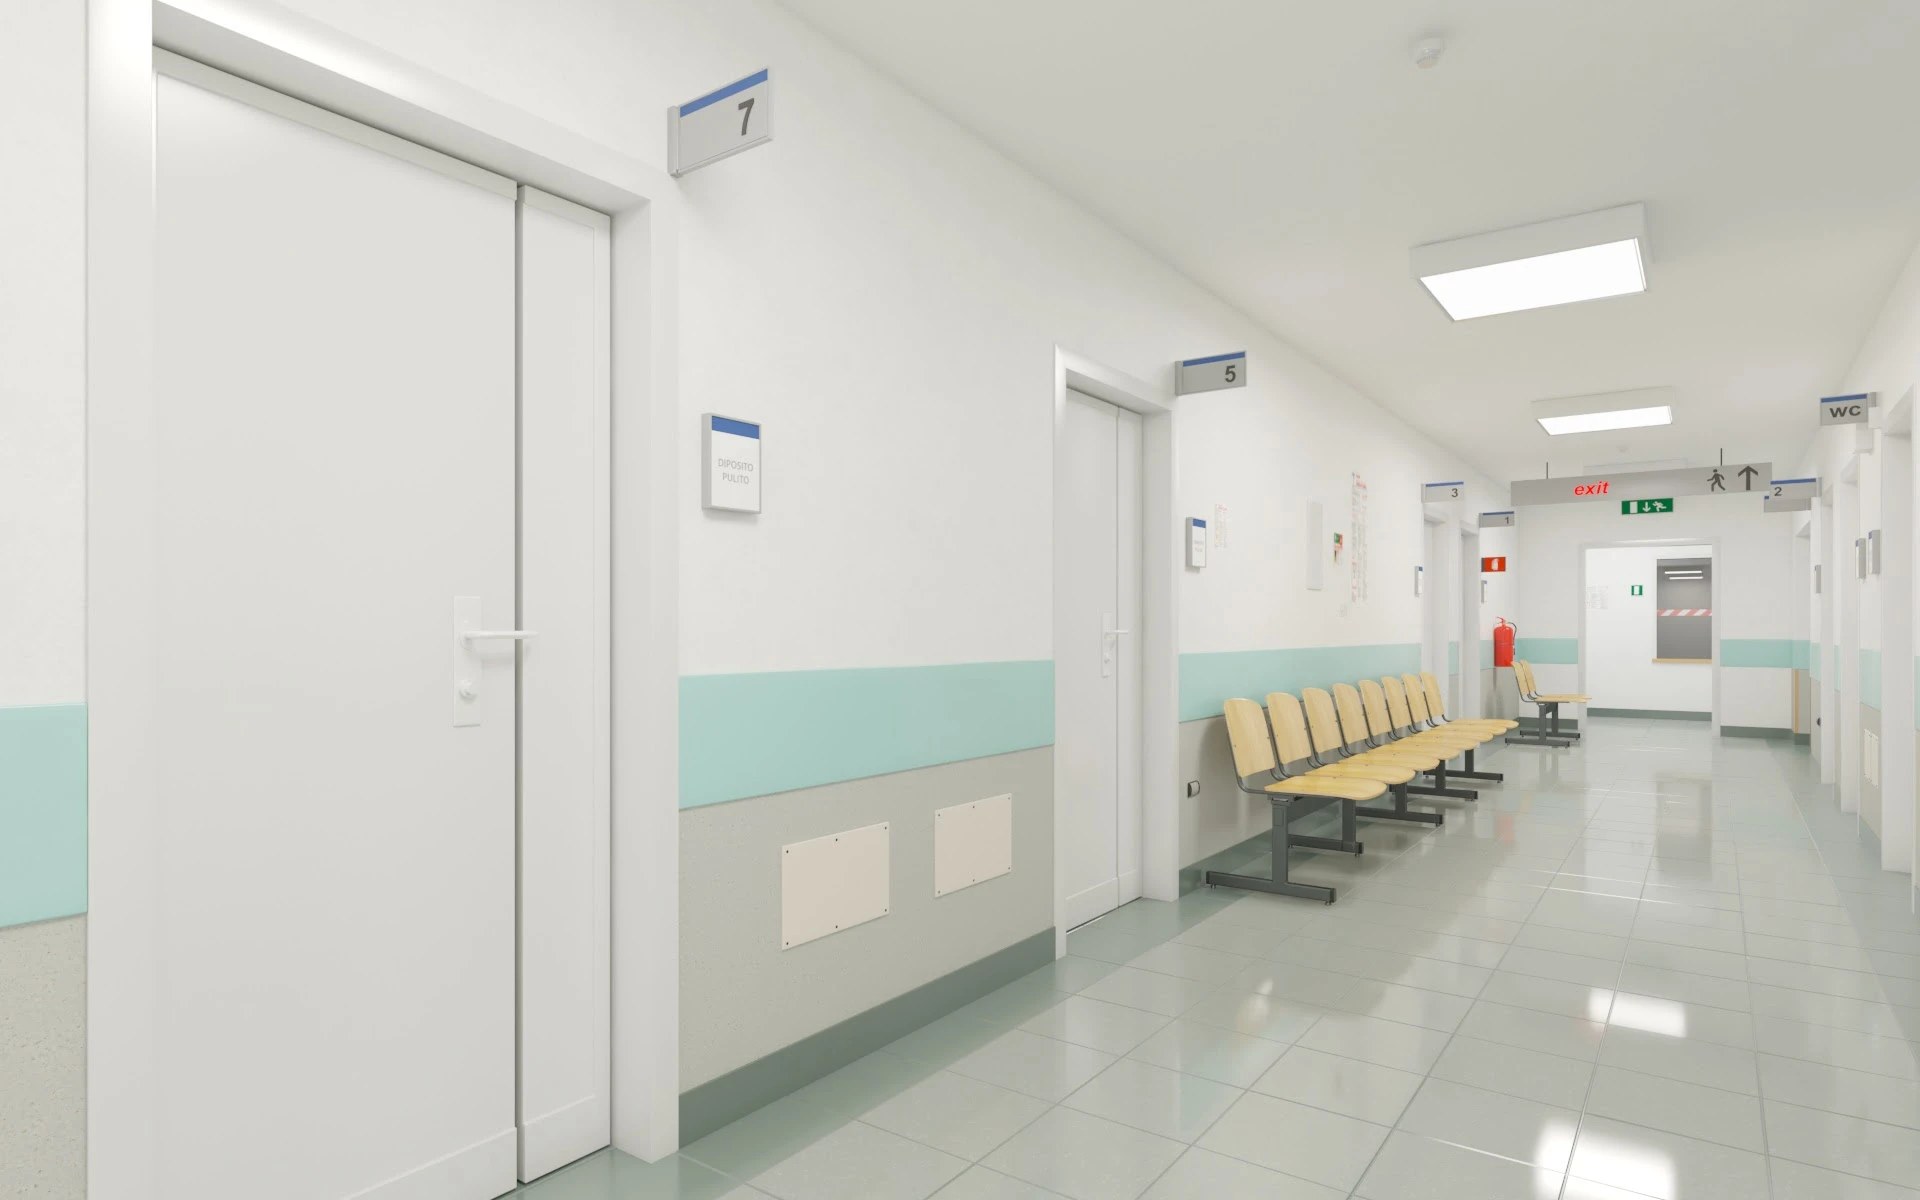 019 Hospital Hallway Corridor 3D Model_03